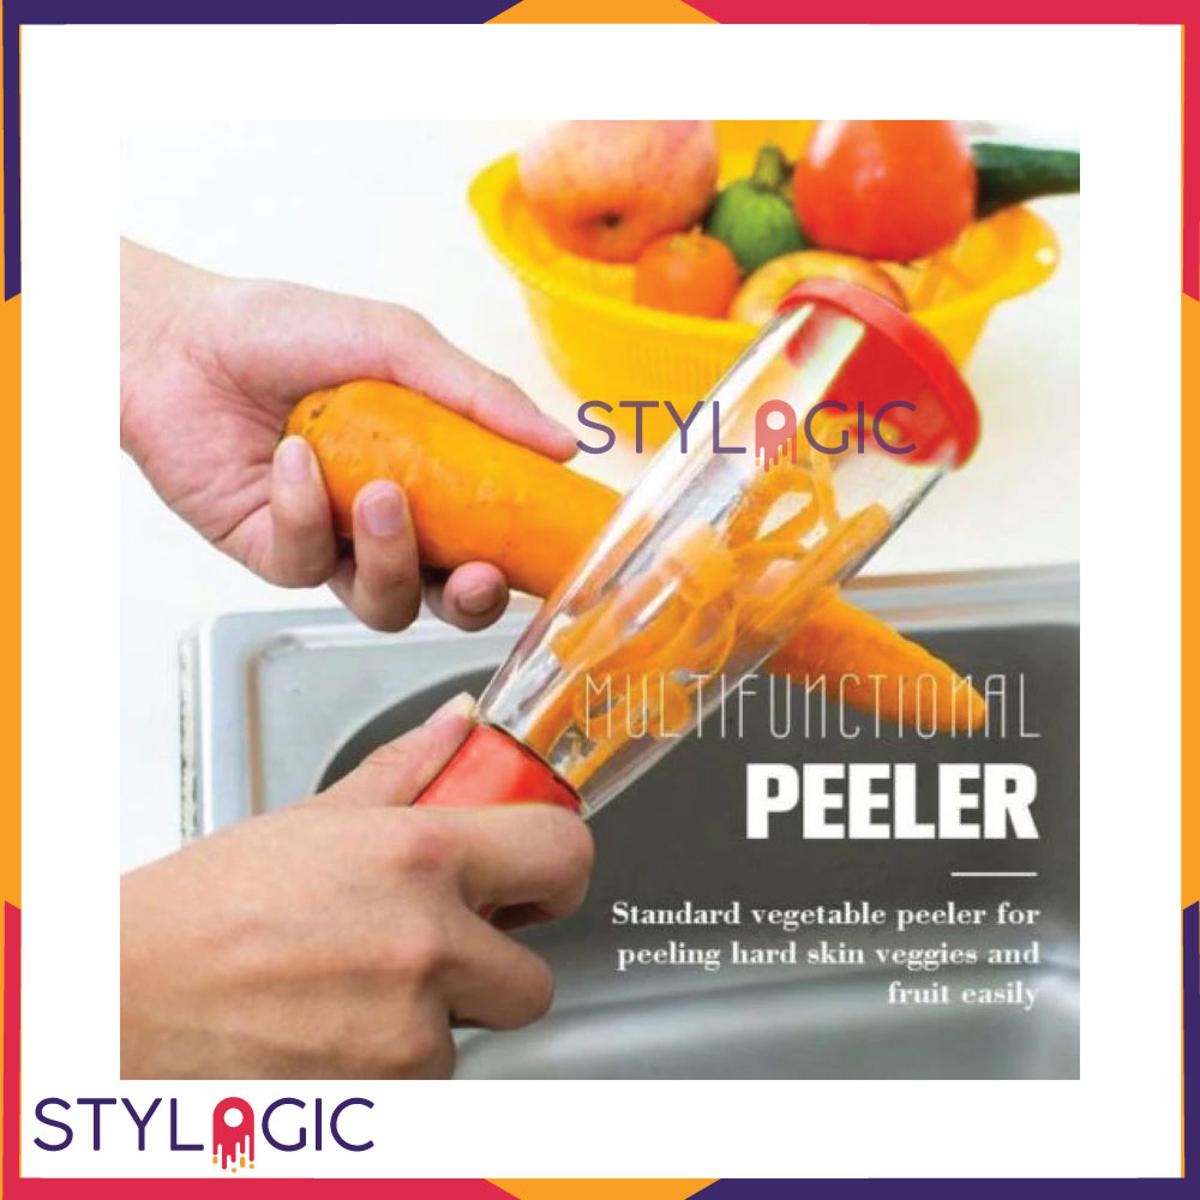 Smart Multifunctional Vegetable Fruit Peeler for Kitchen with Peel